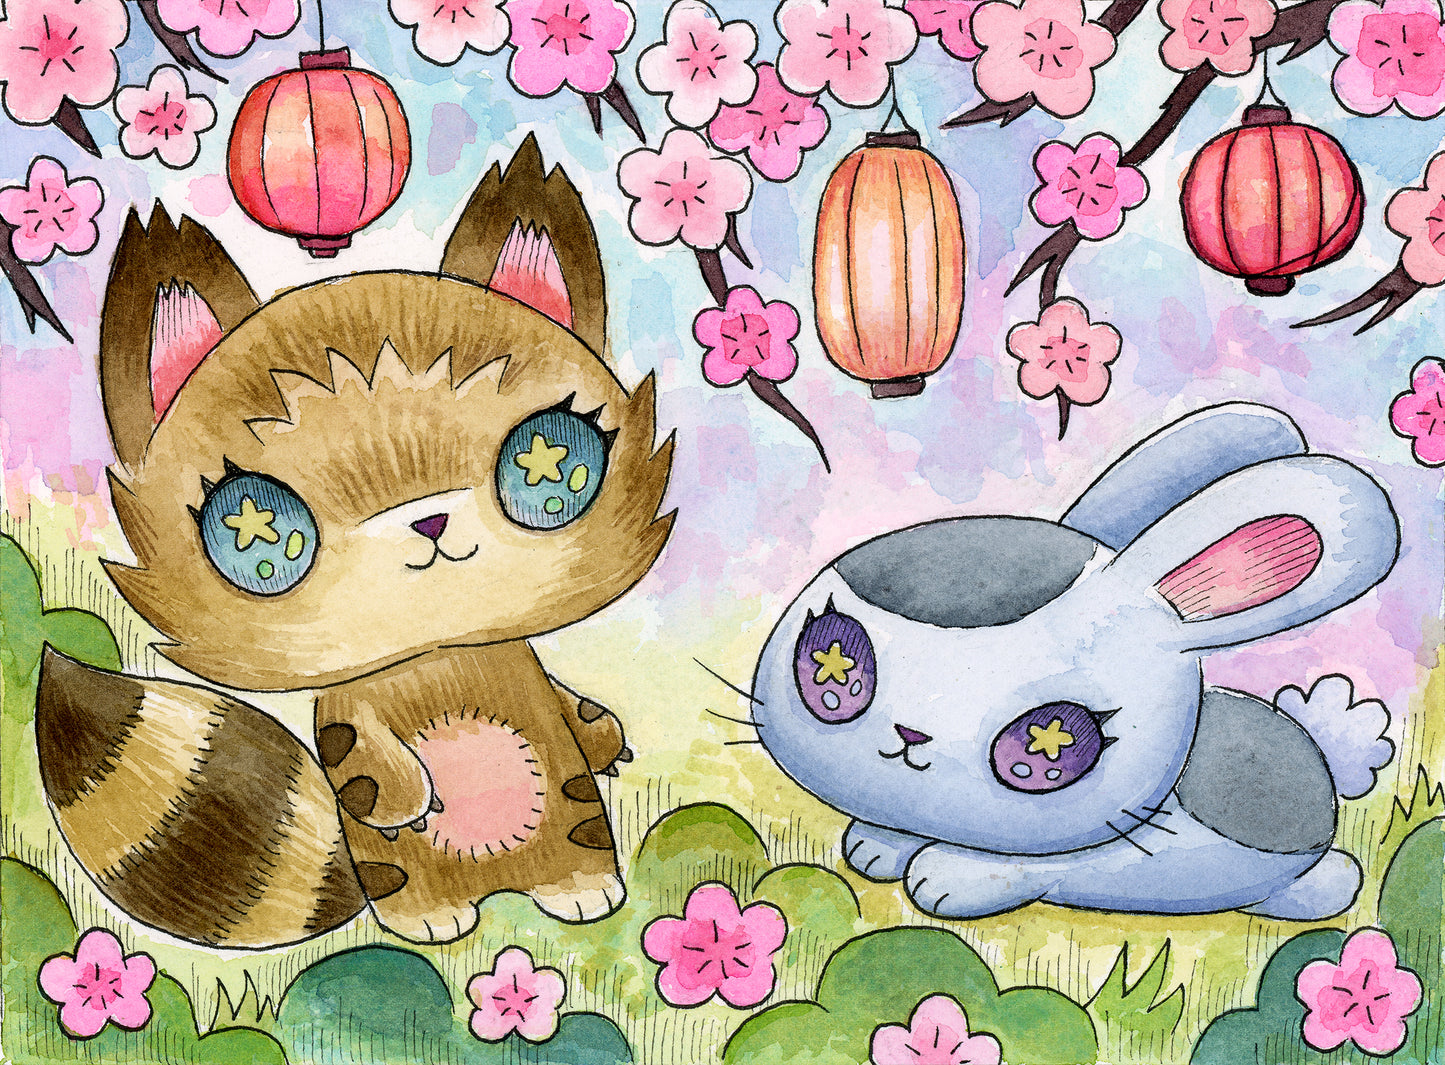 Sakura Party - Watercolor Painting